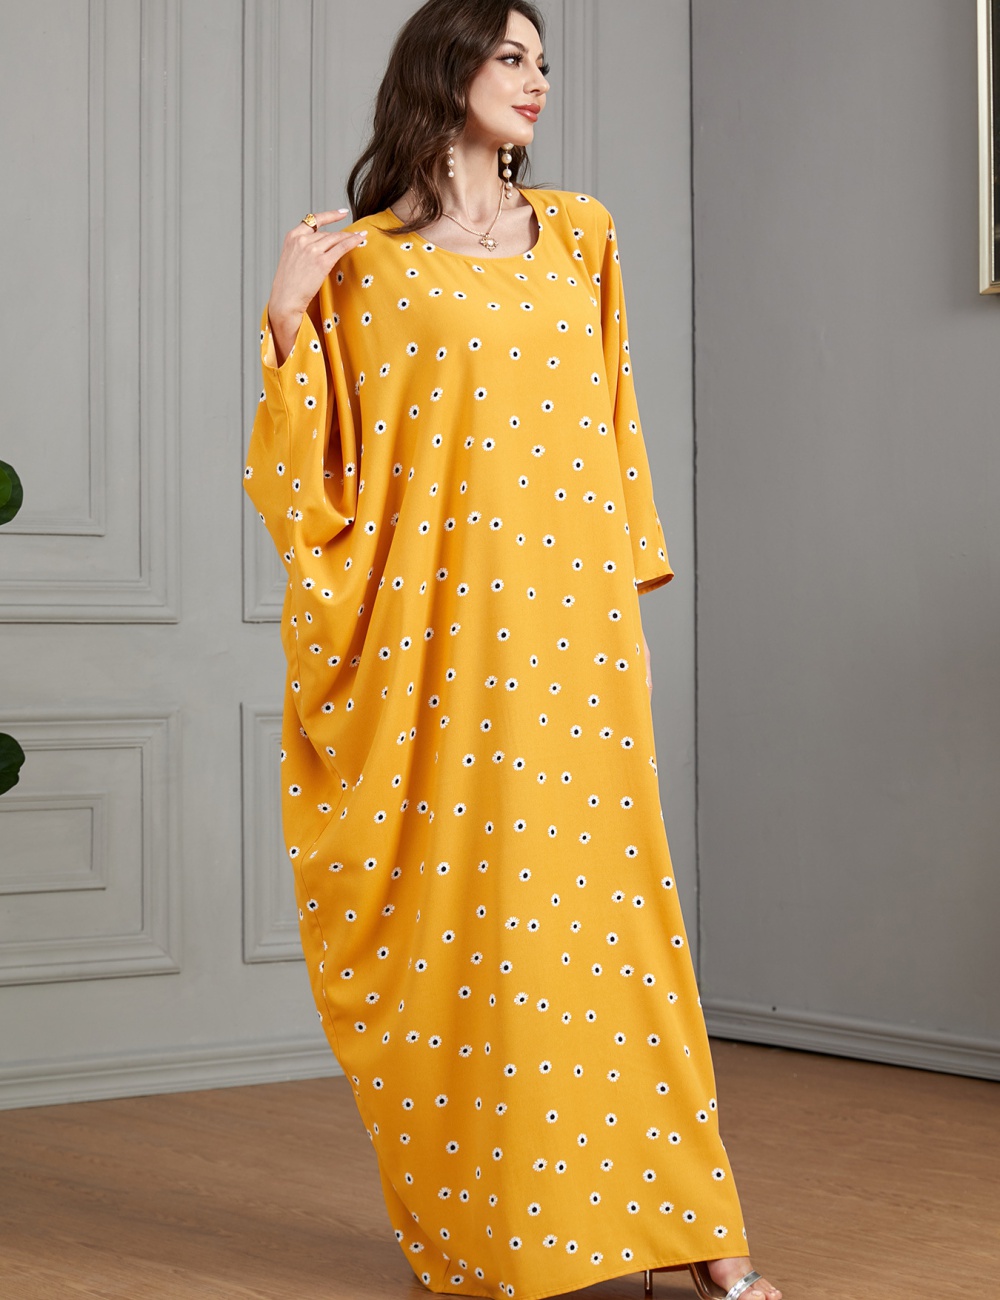 Casual printing loose yellow bat sleeve dress for women